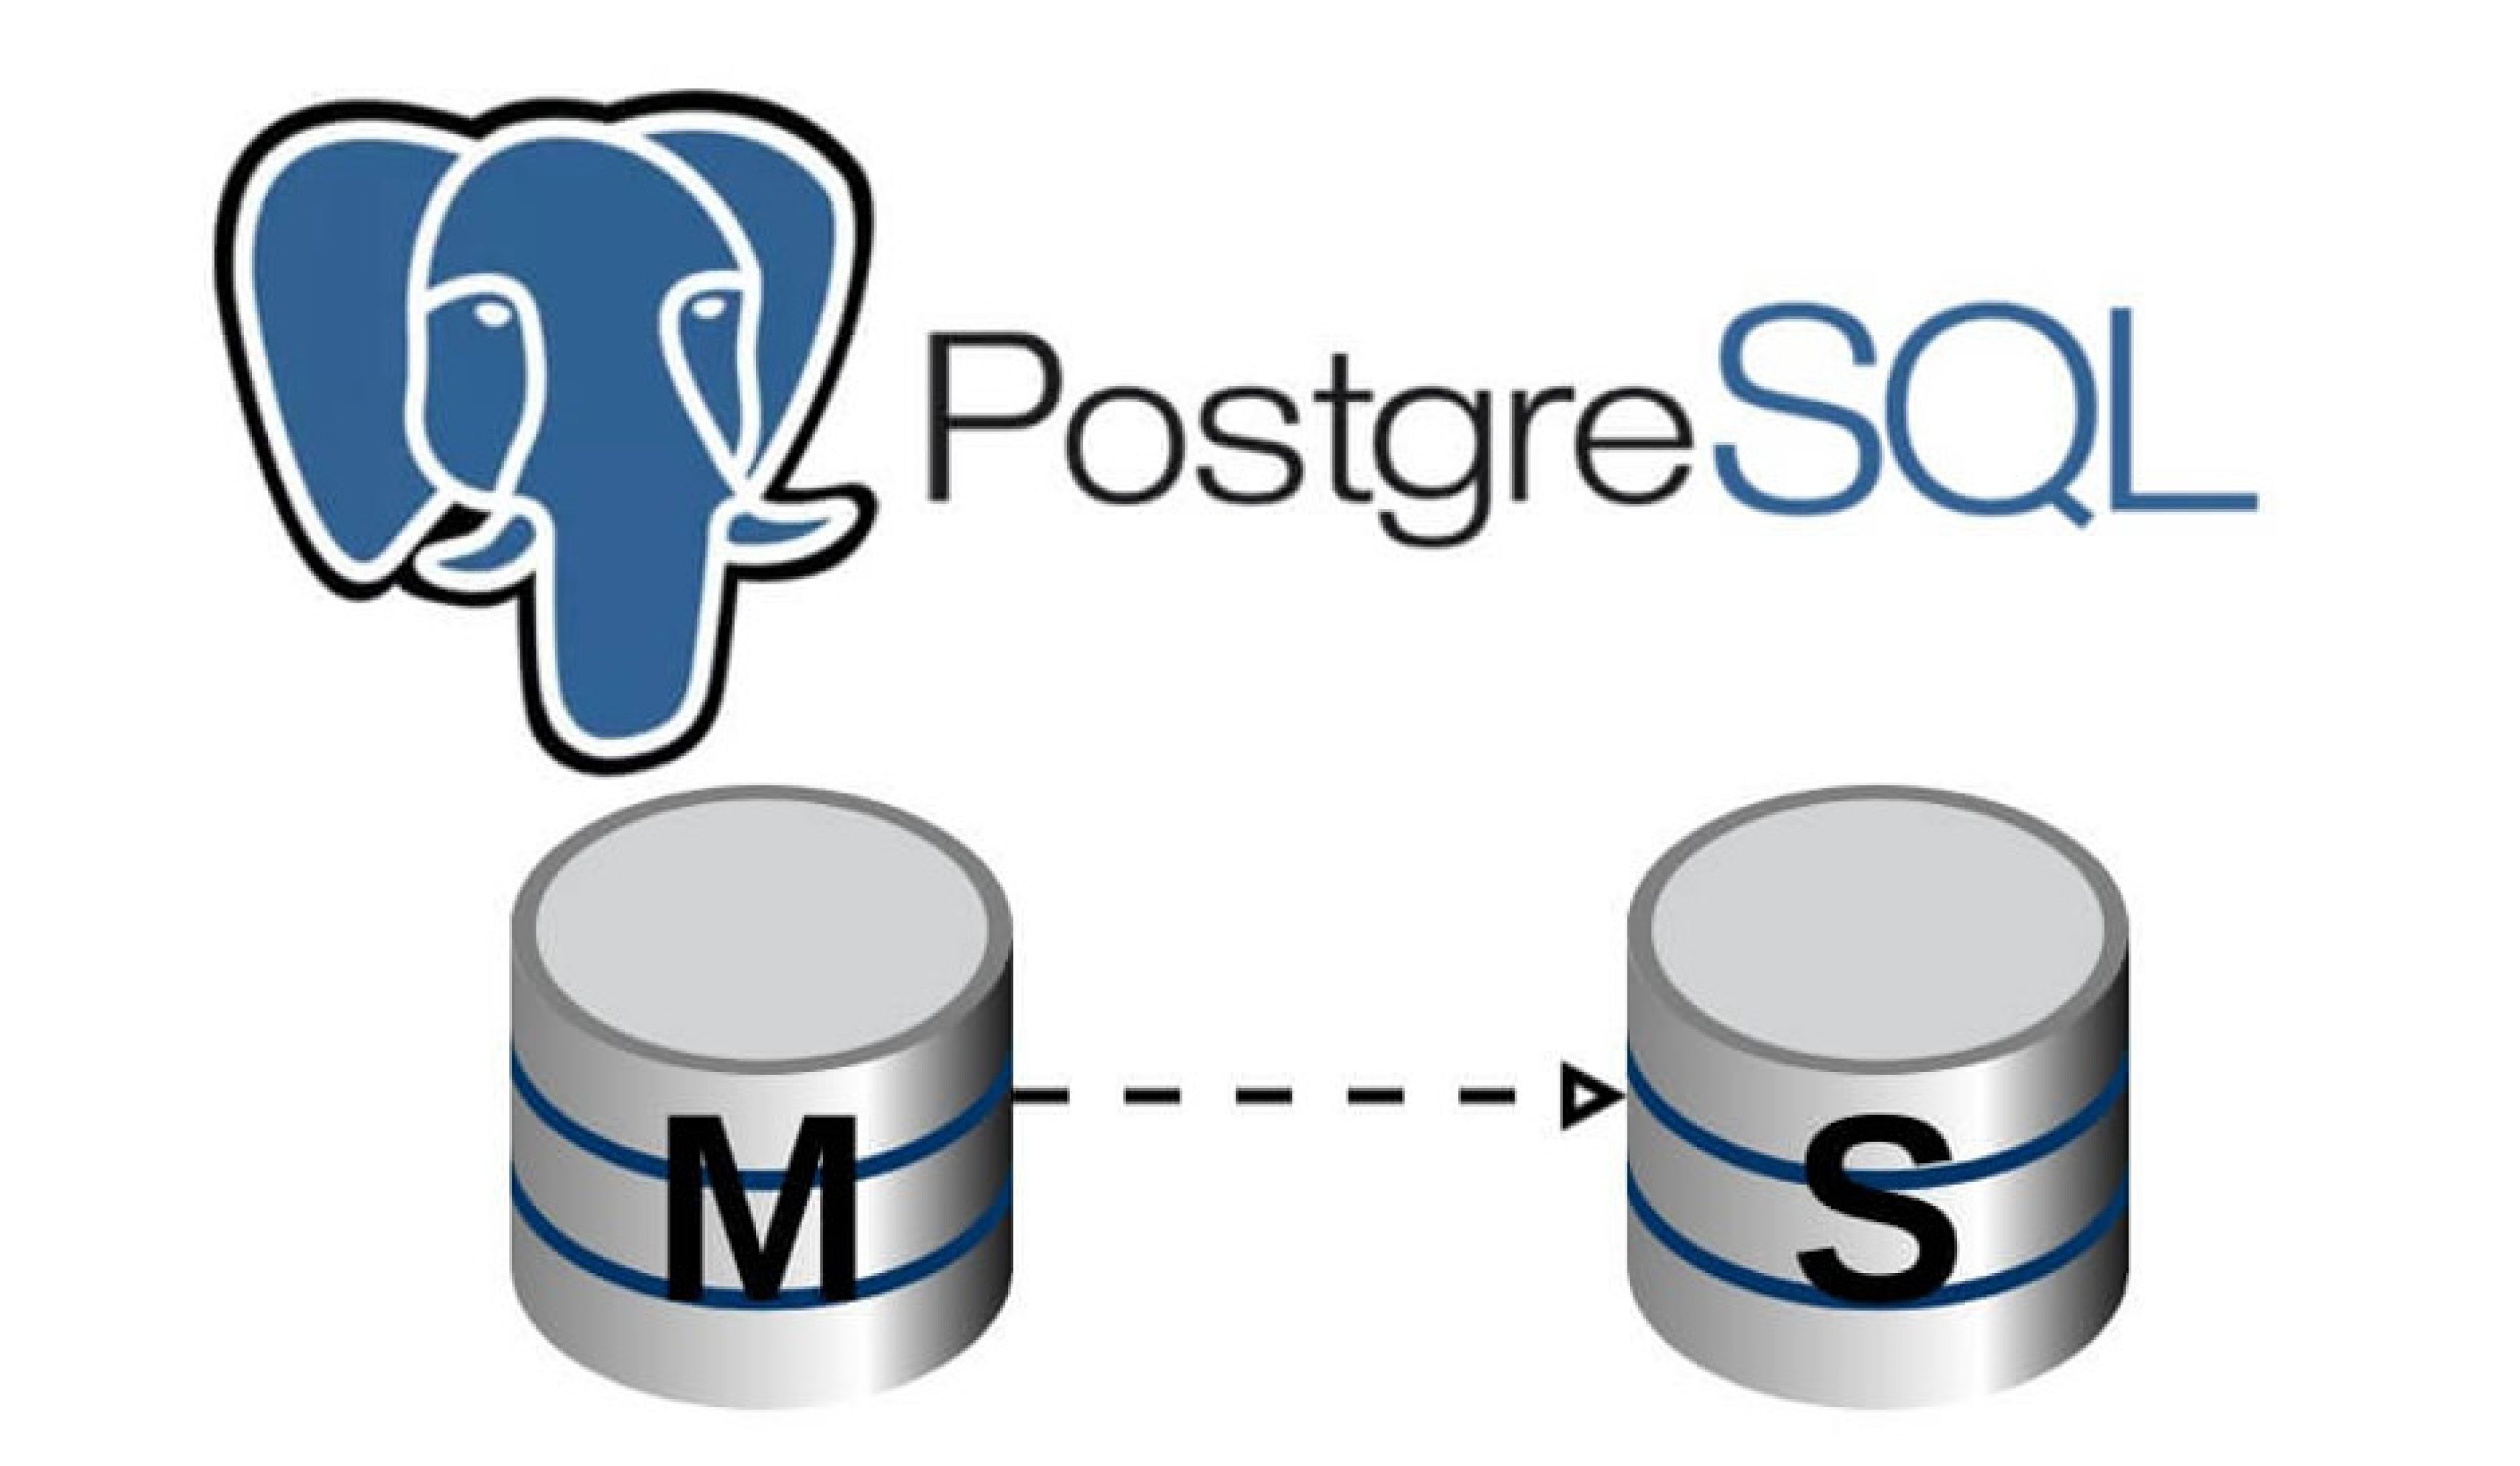 Postgresql rank. POSTGRESQL картинки. Постгрес SQL. СУБД POSTGRESQL. POSTGRESQL 14.